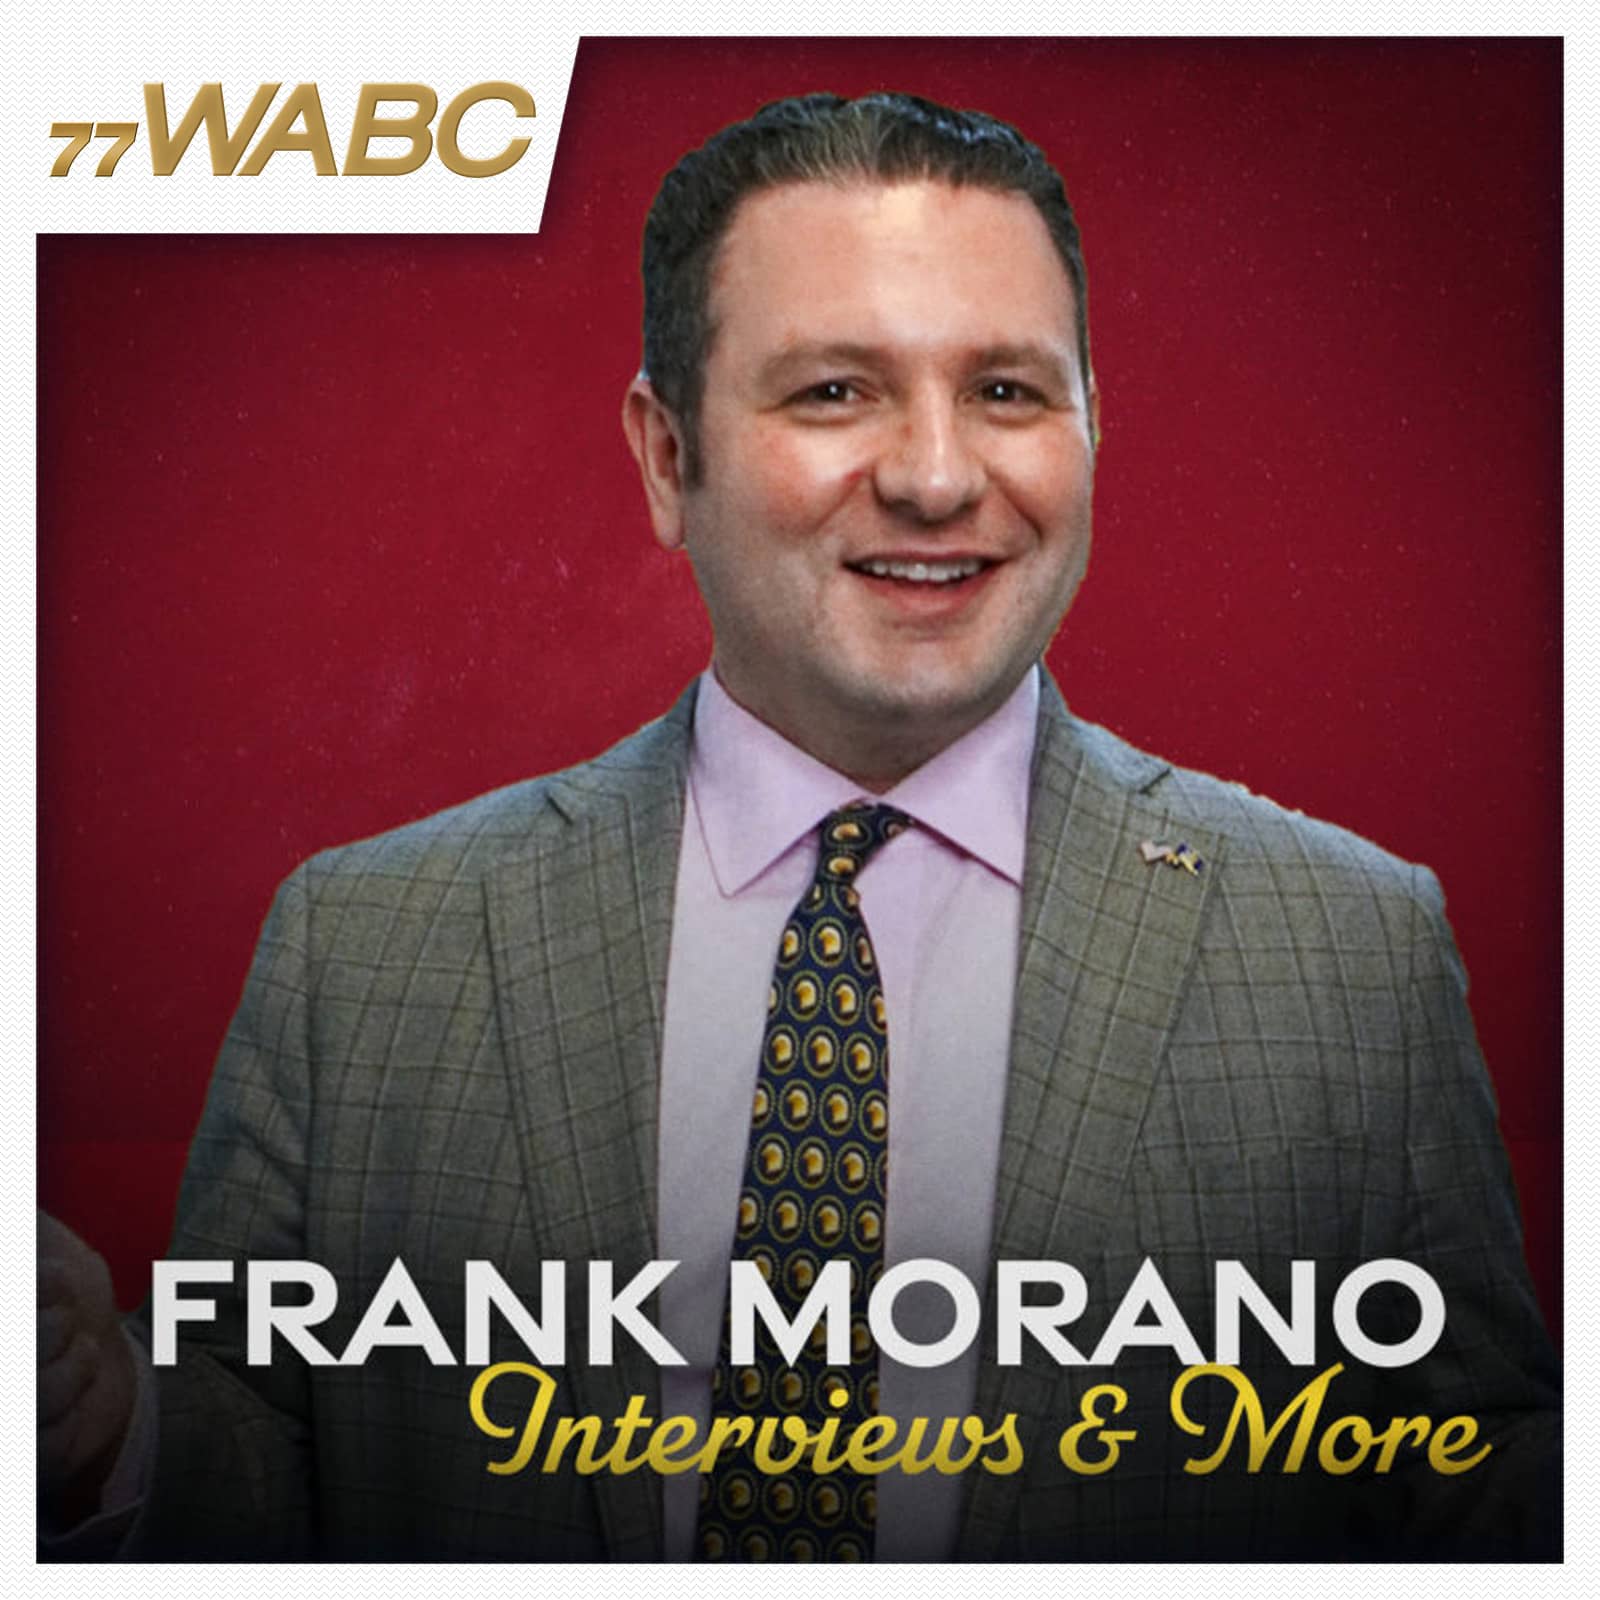 frank-morano-interviews-and-more-podcast-new-logo248010